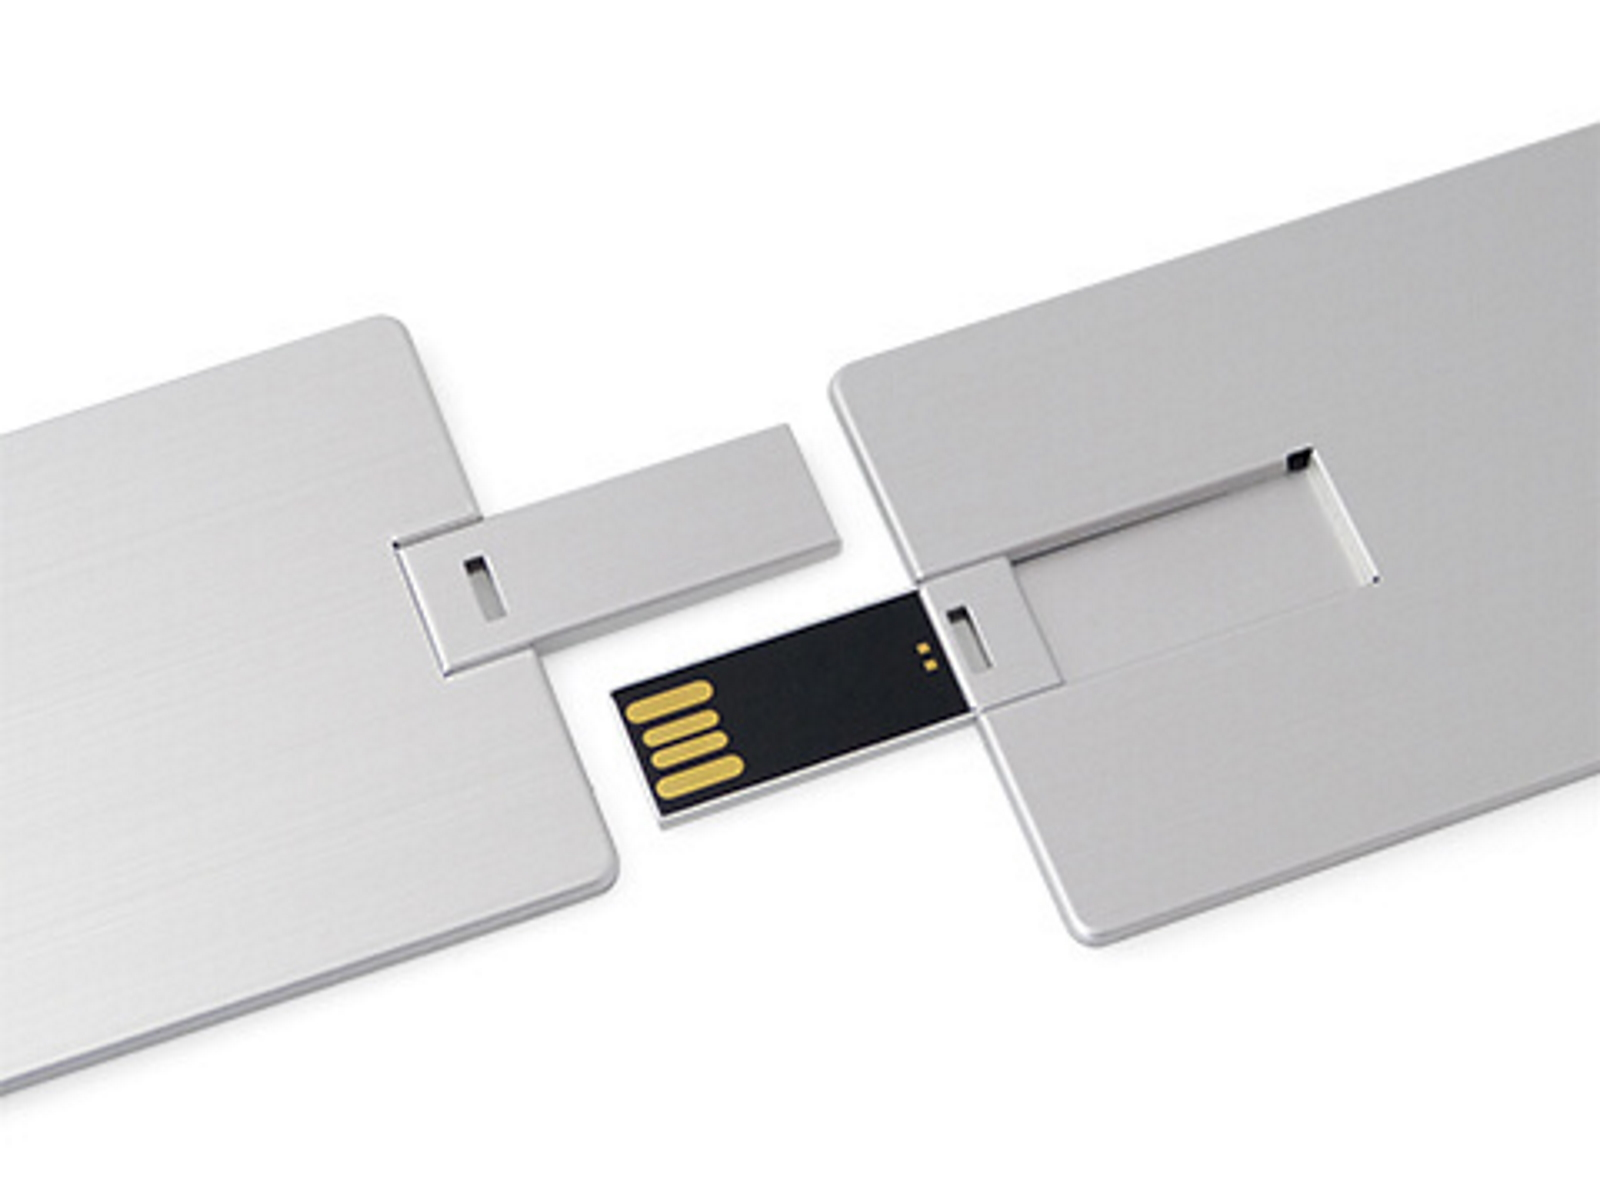 USB GERMANY ® Metall-Kreditkarte USB-Stick 64 GB) (Silber